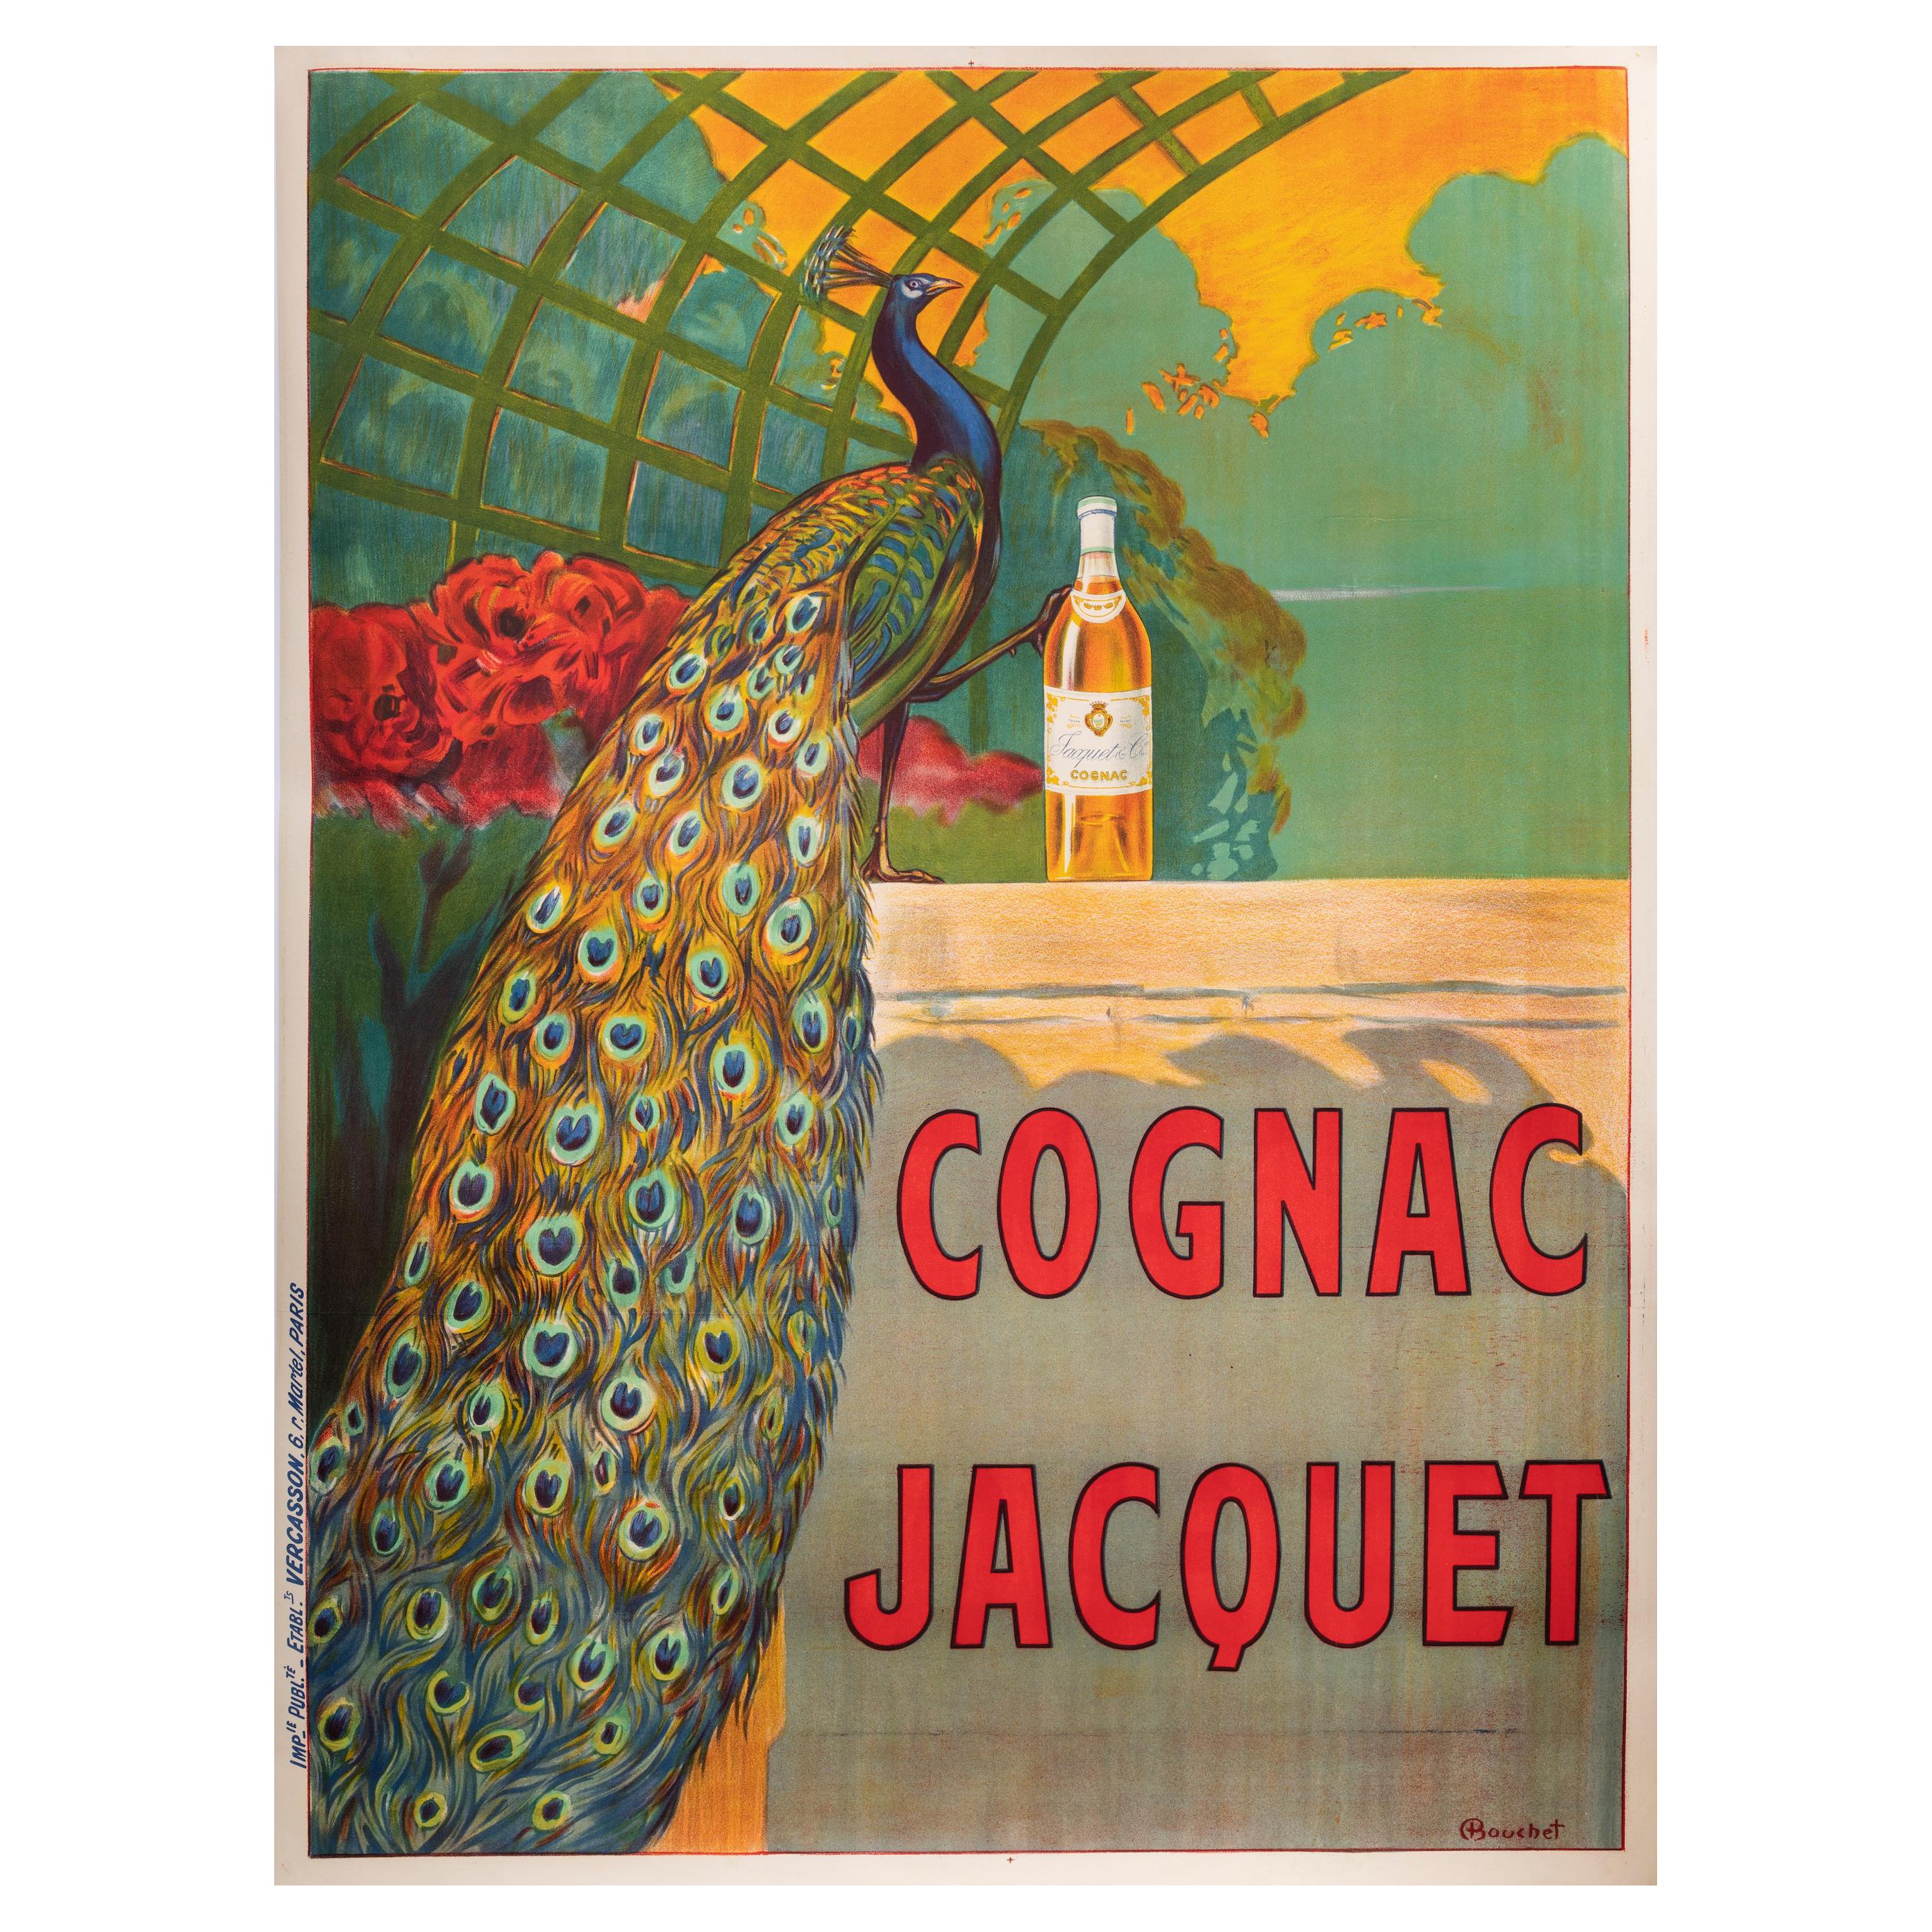 Bouchet, Original Vintage Poster, Cognac Jacquet, Peacock, Rose Garden, 1915